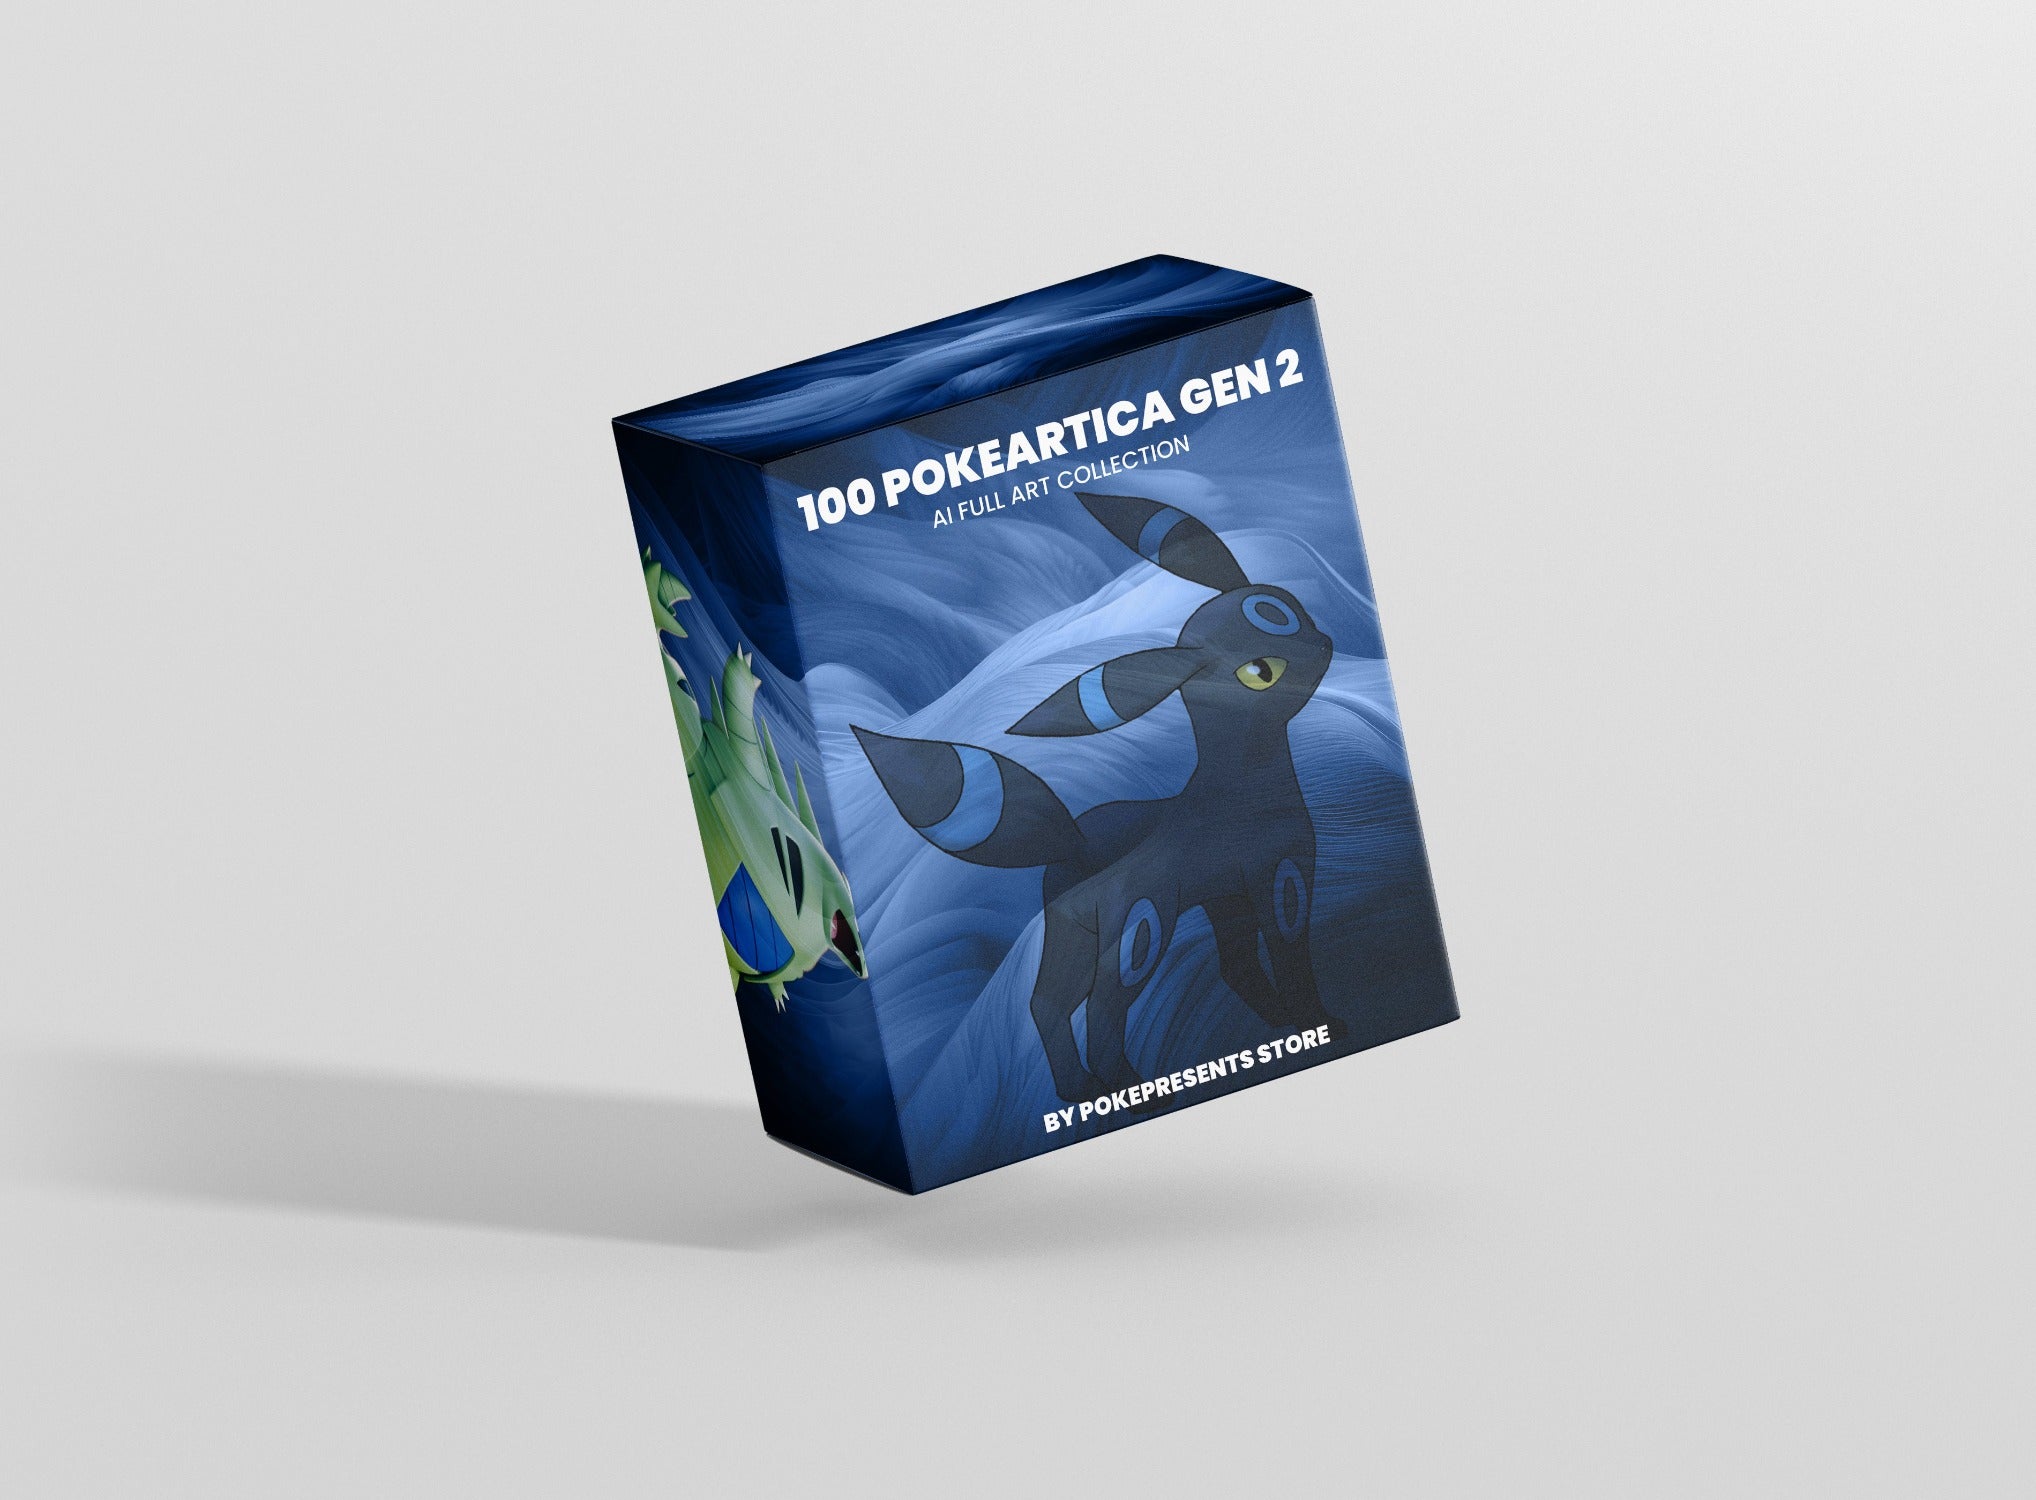 100 PokeArtica Gen 2 - AI Full Art Collection! Mixed of Holo and Non Holo (PRE-ORDER Now)